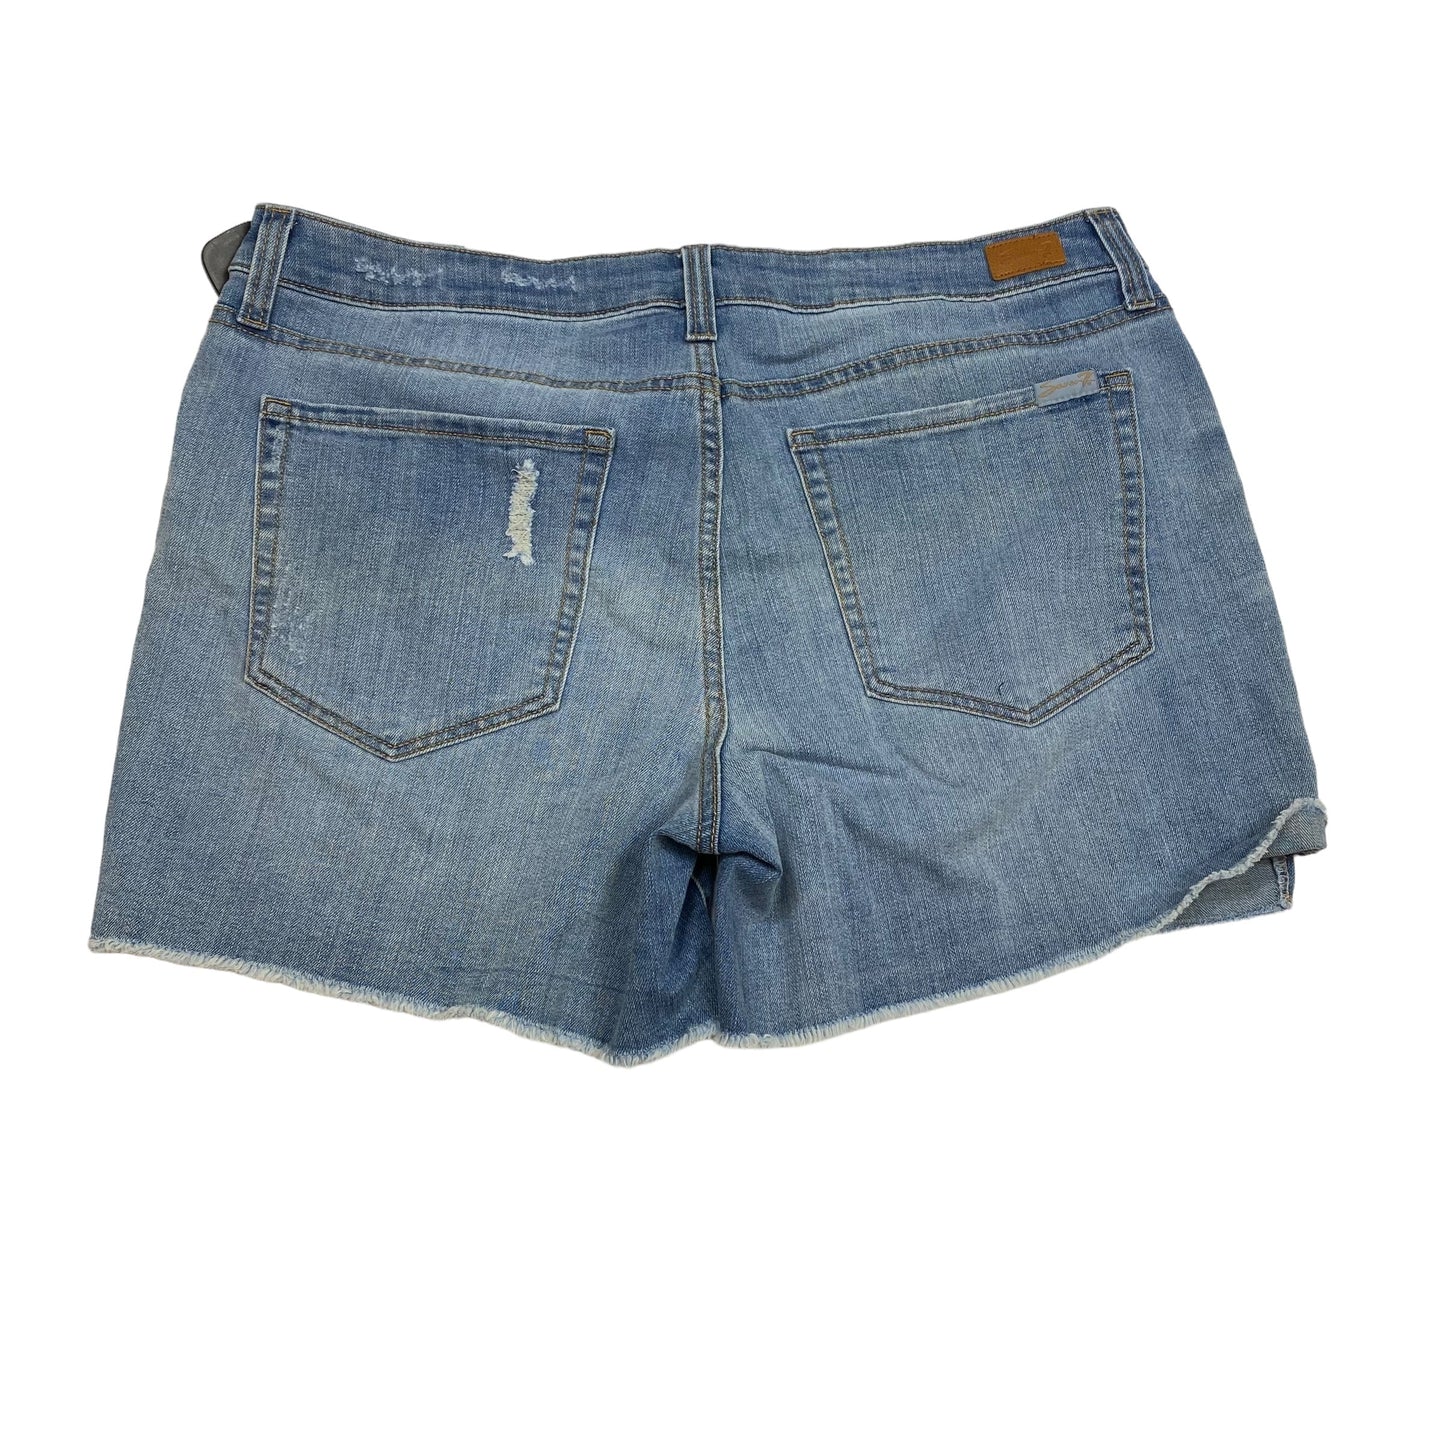 Blue Denim Shorts Seven 7, Size 12